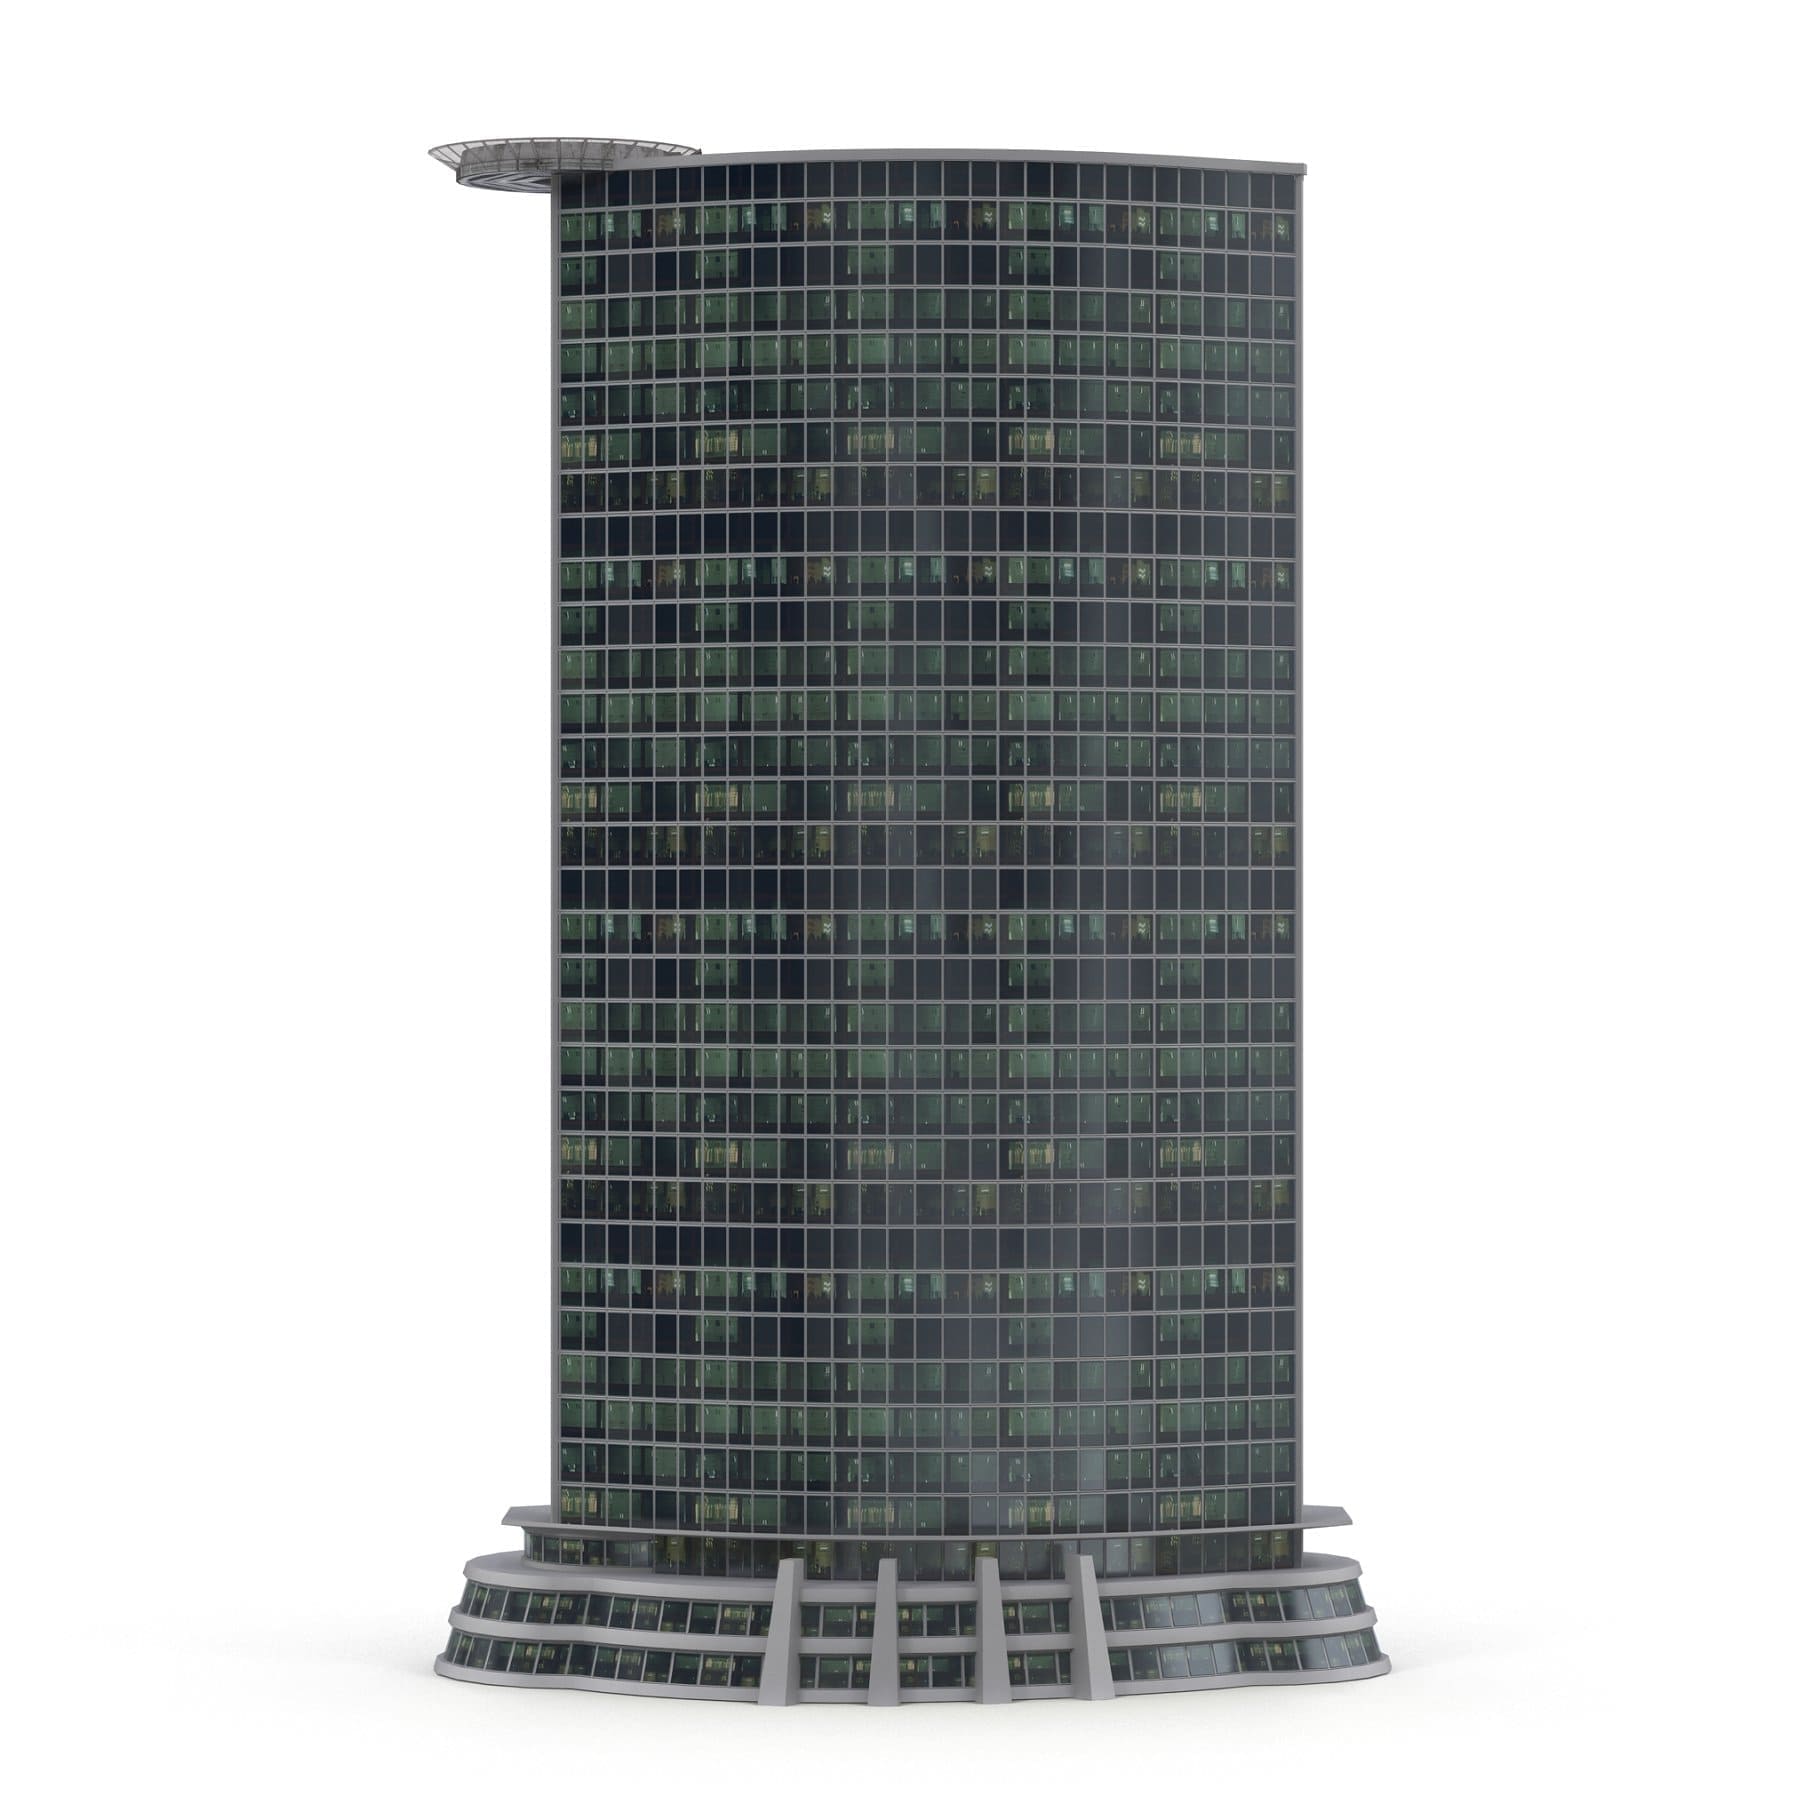 A skyscraper with a round helipad.